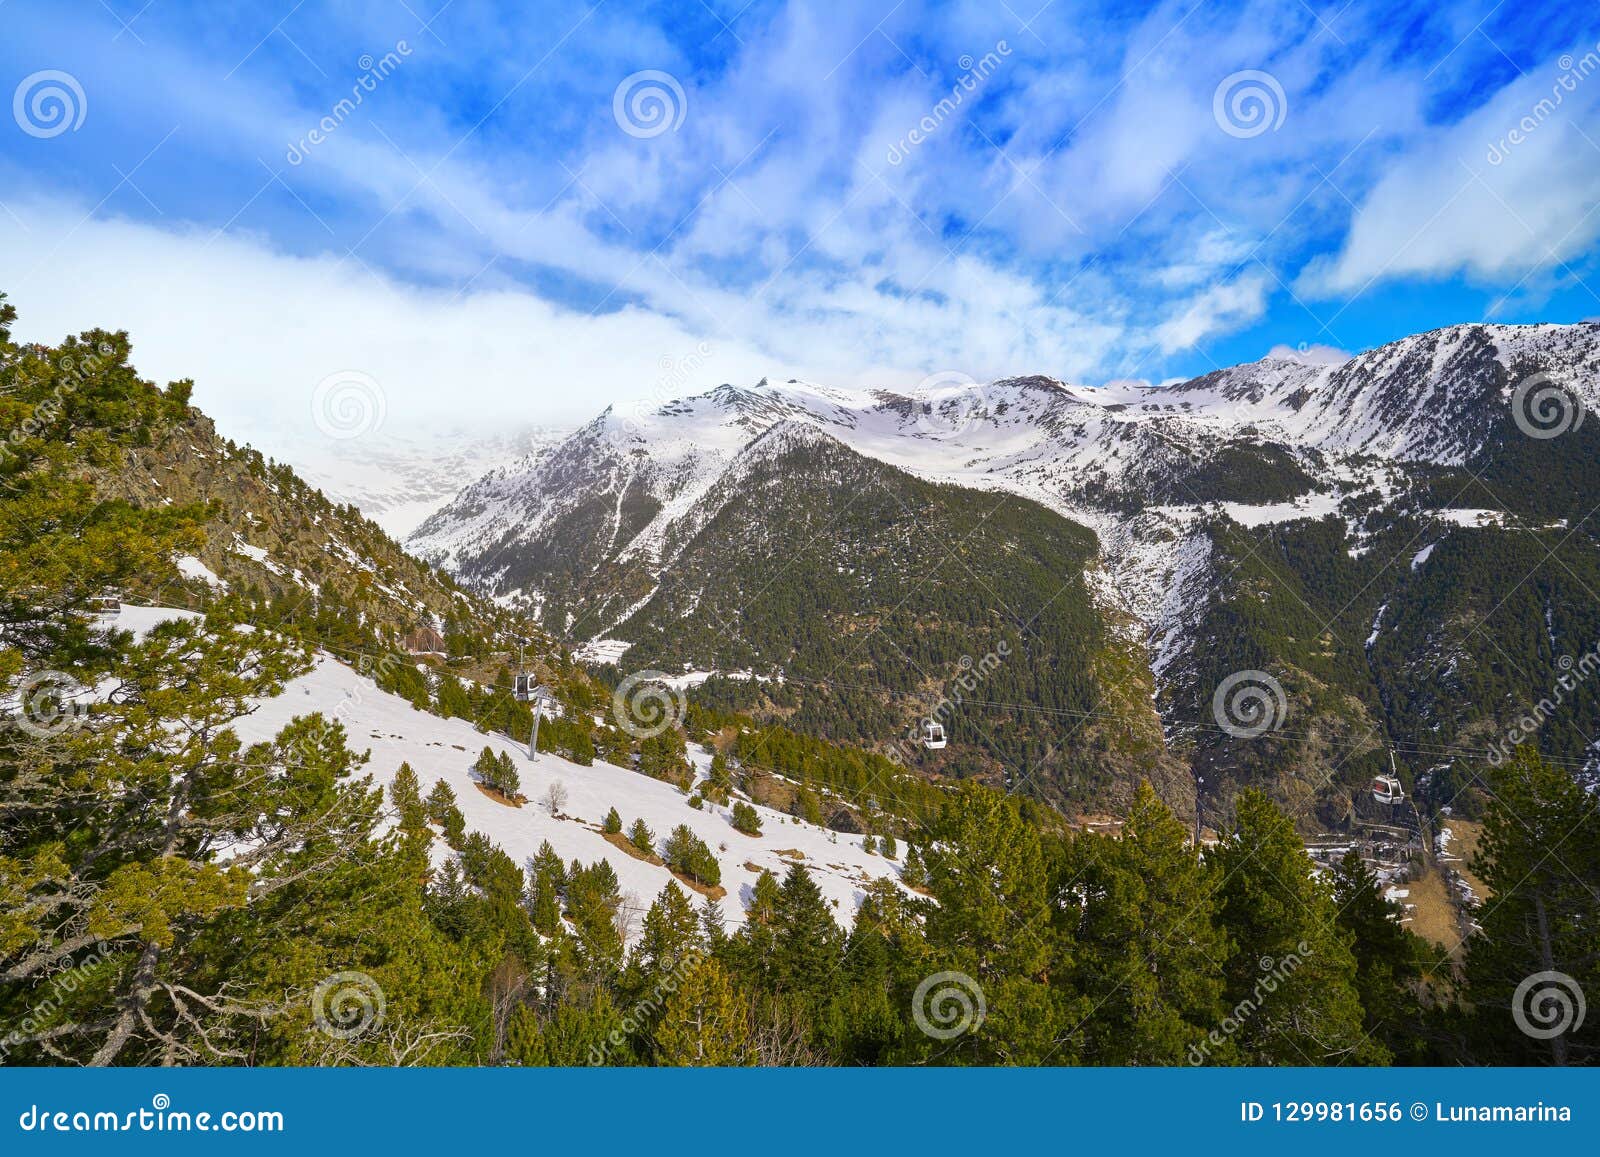 arinsal mountains in andorra pyrenees